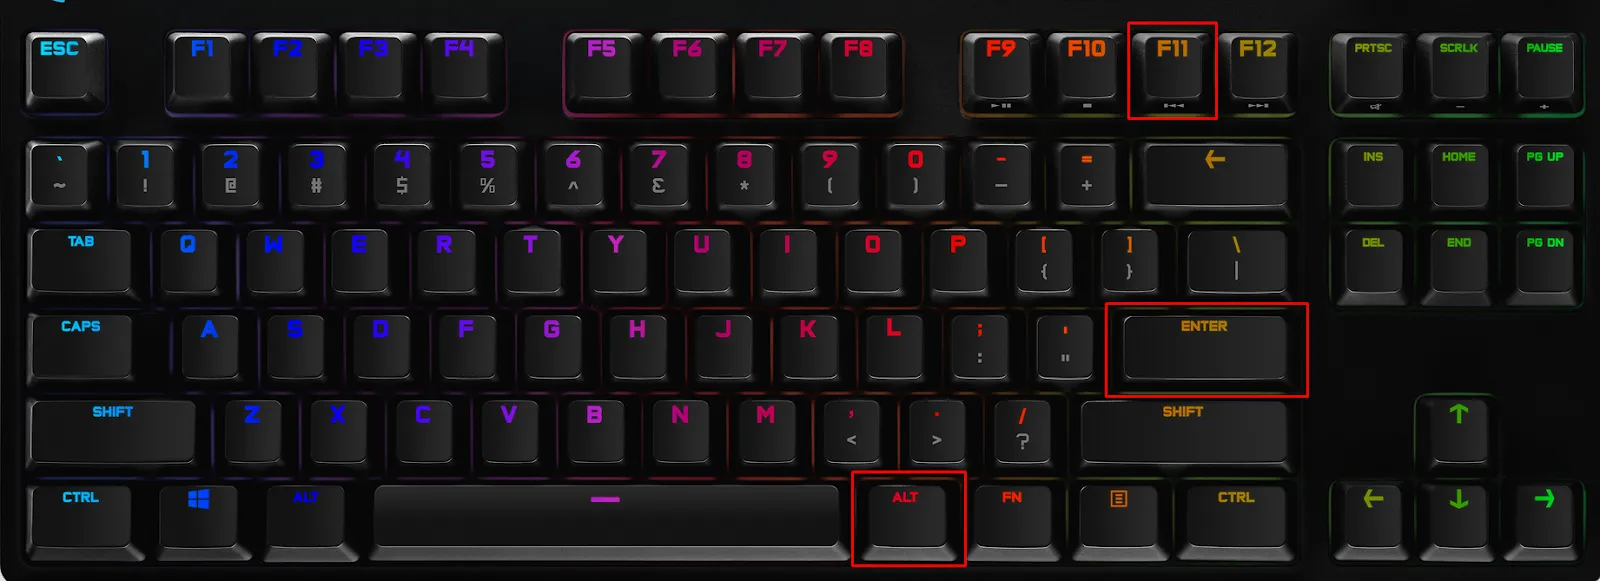 fullscreen keyboard shortcut dying light